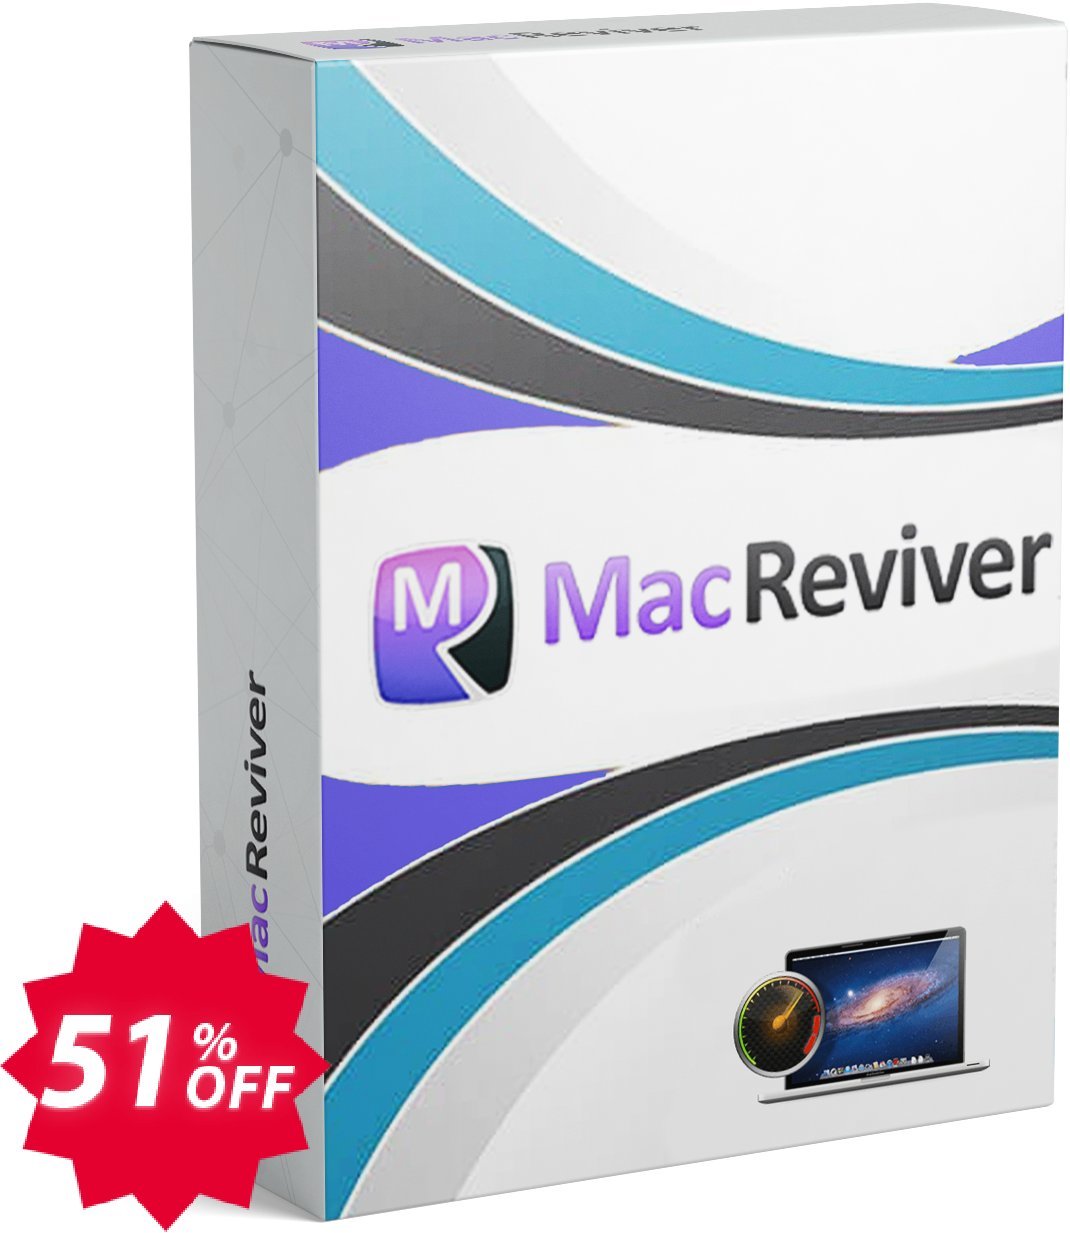 MACReviver Coupon code 51% discount 